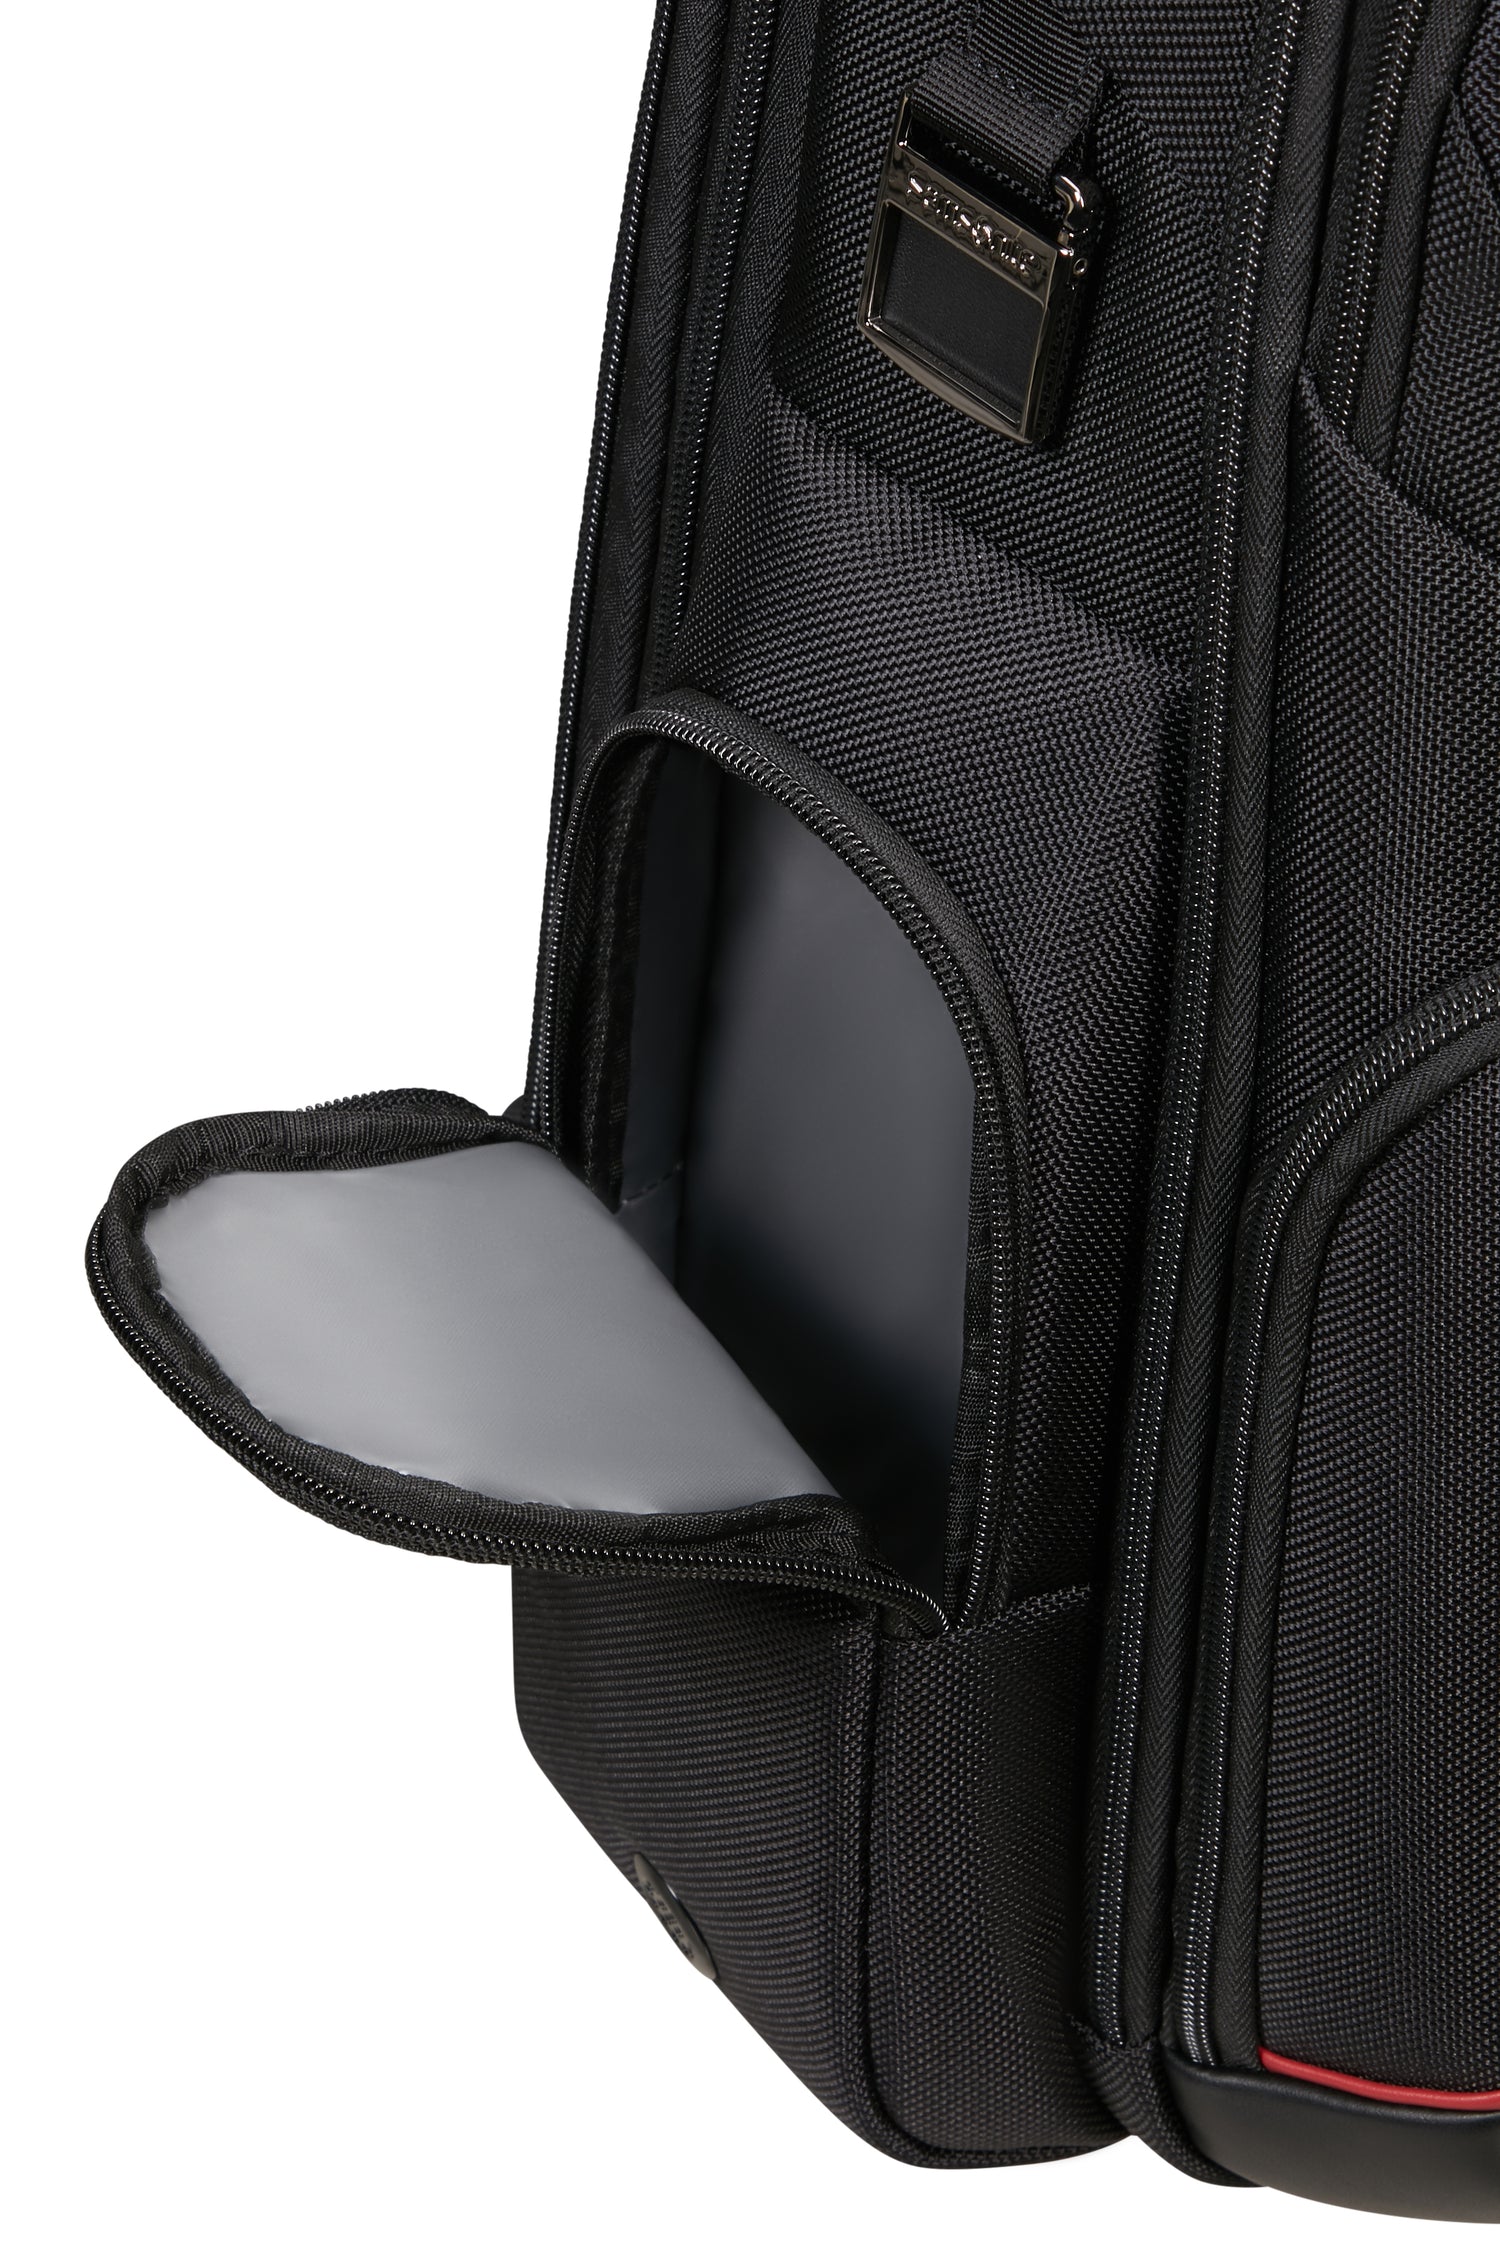 Samsonite PRO-DLX 6 - 17.6 EXP Backpack